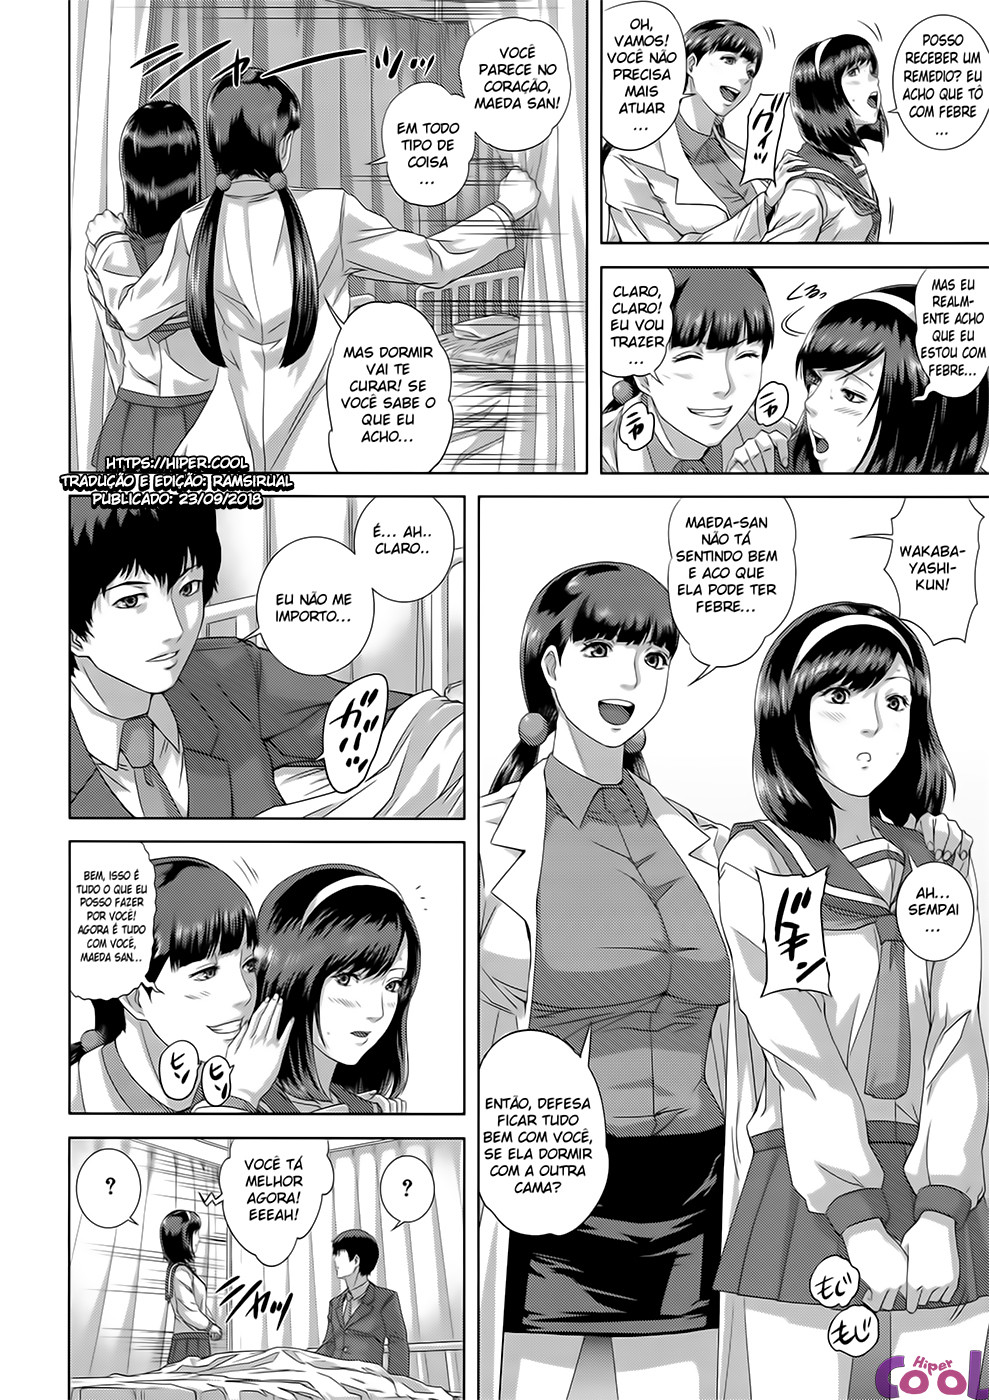 chiteki-koukishin-chapter-05-page-02.jpg